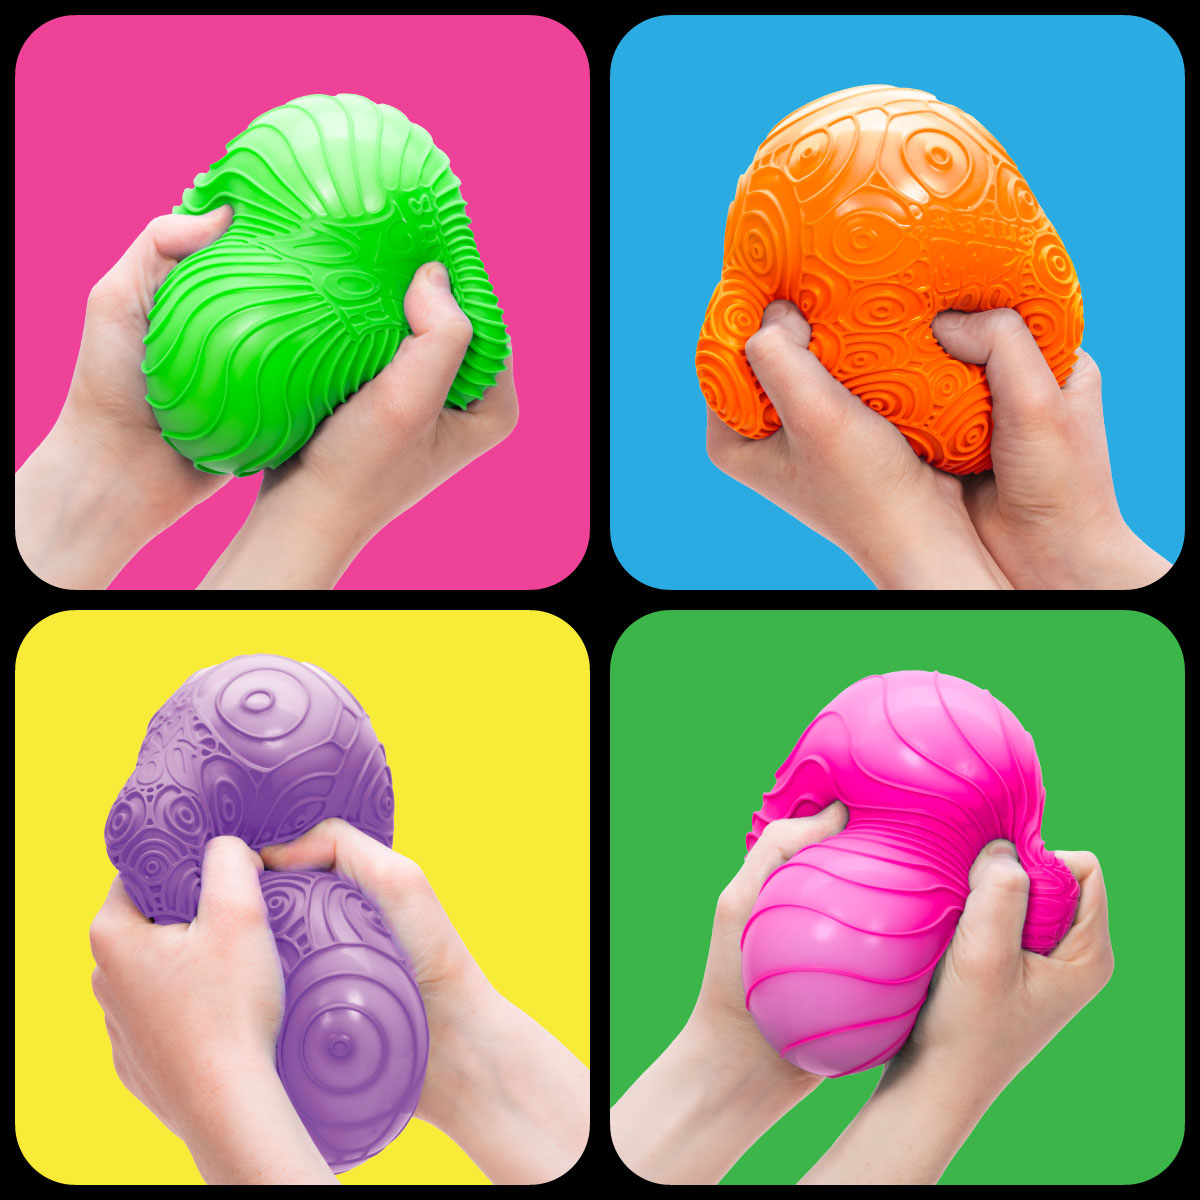 Schylling Super NeeDoh Ripples Stress Ball Fidget Toy